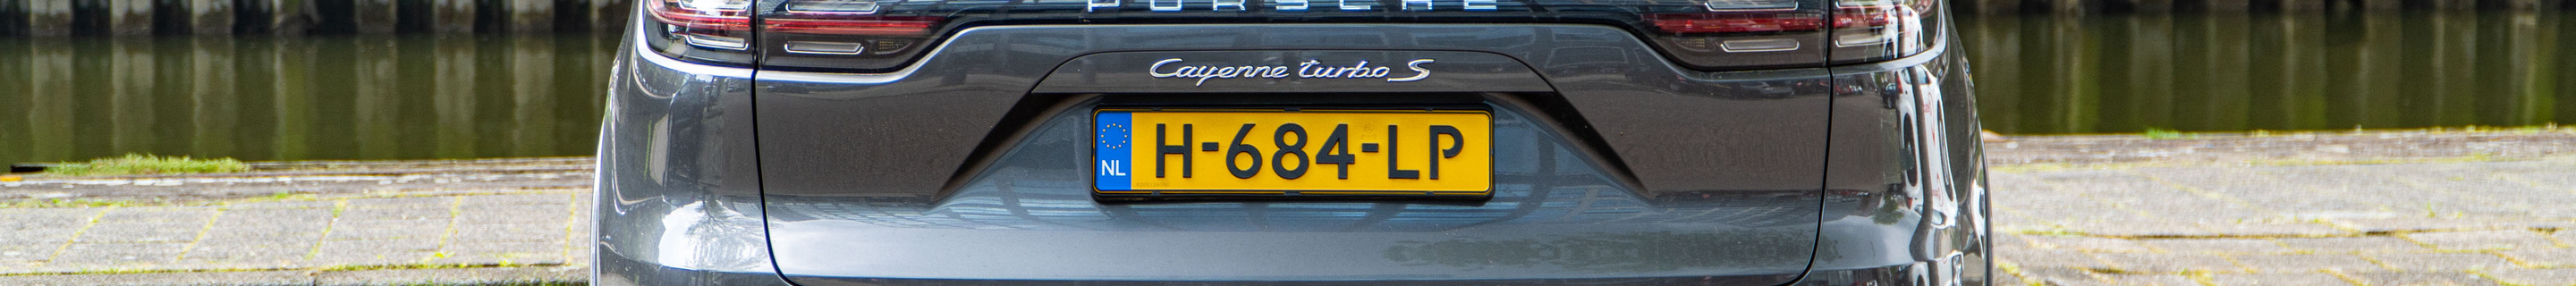 Porsche Cayenne Turbo S E-Hybrid